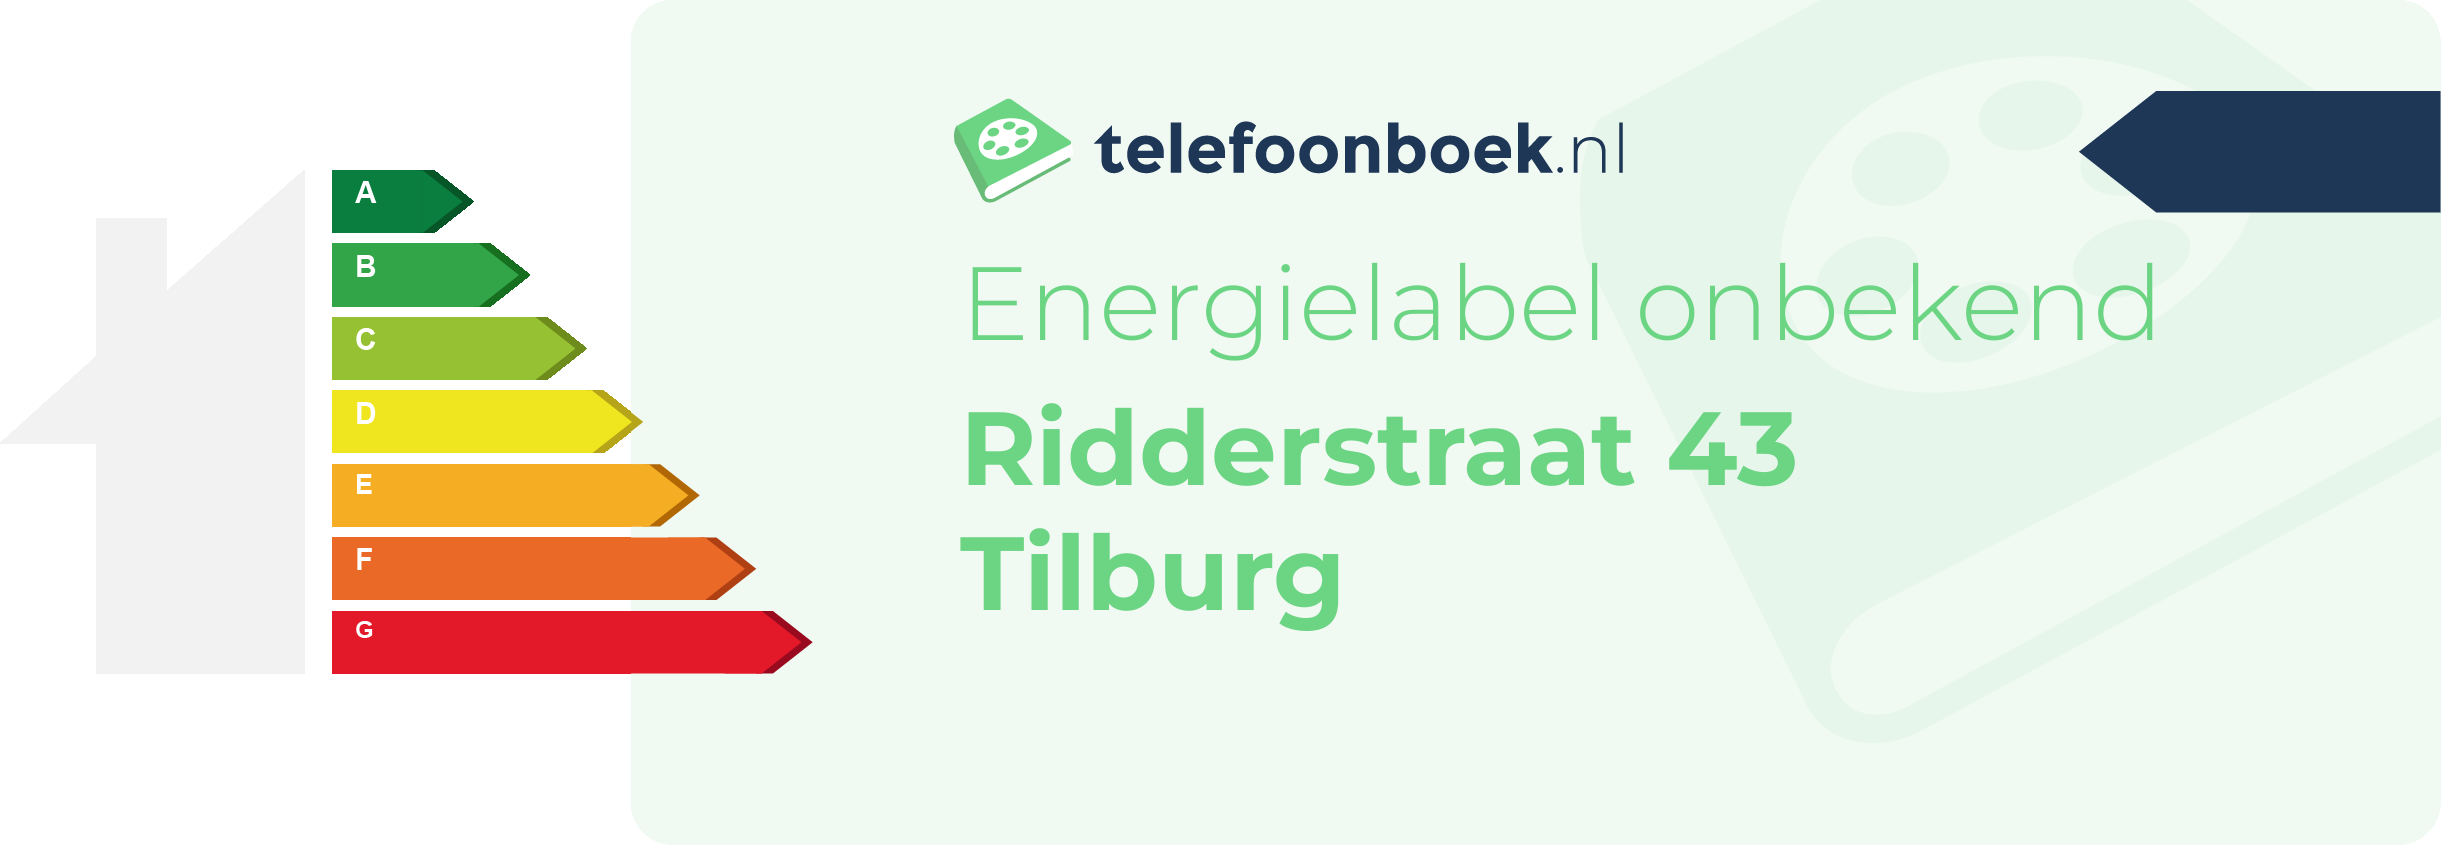 Energielabel Ridderstraat 43 Tilburg